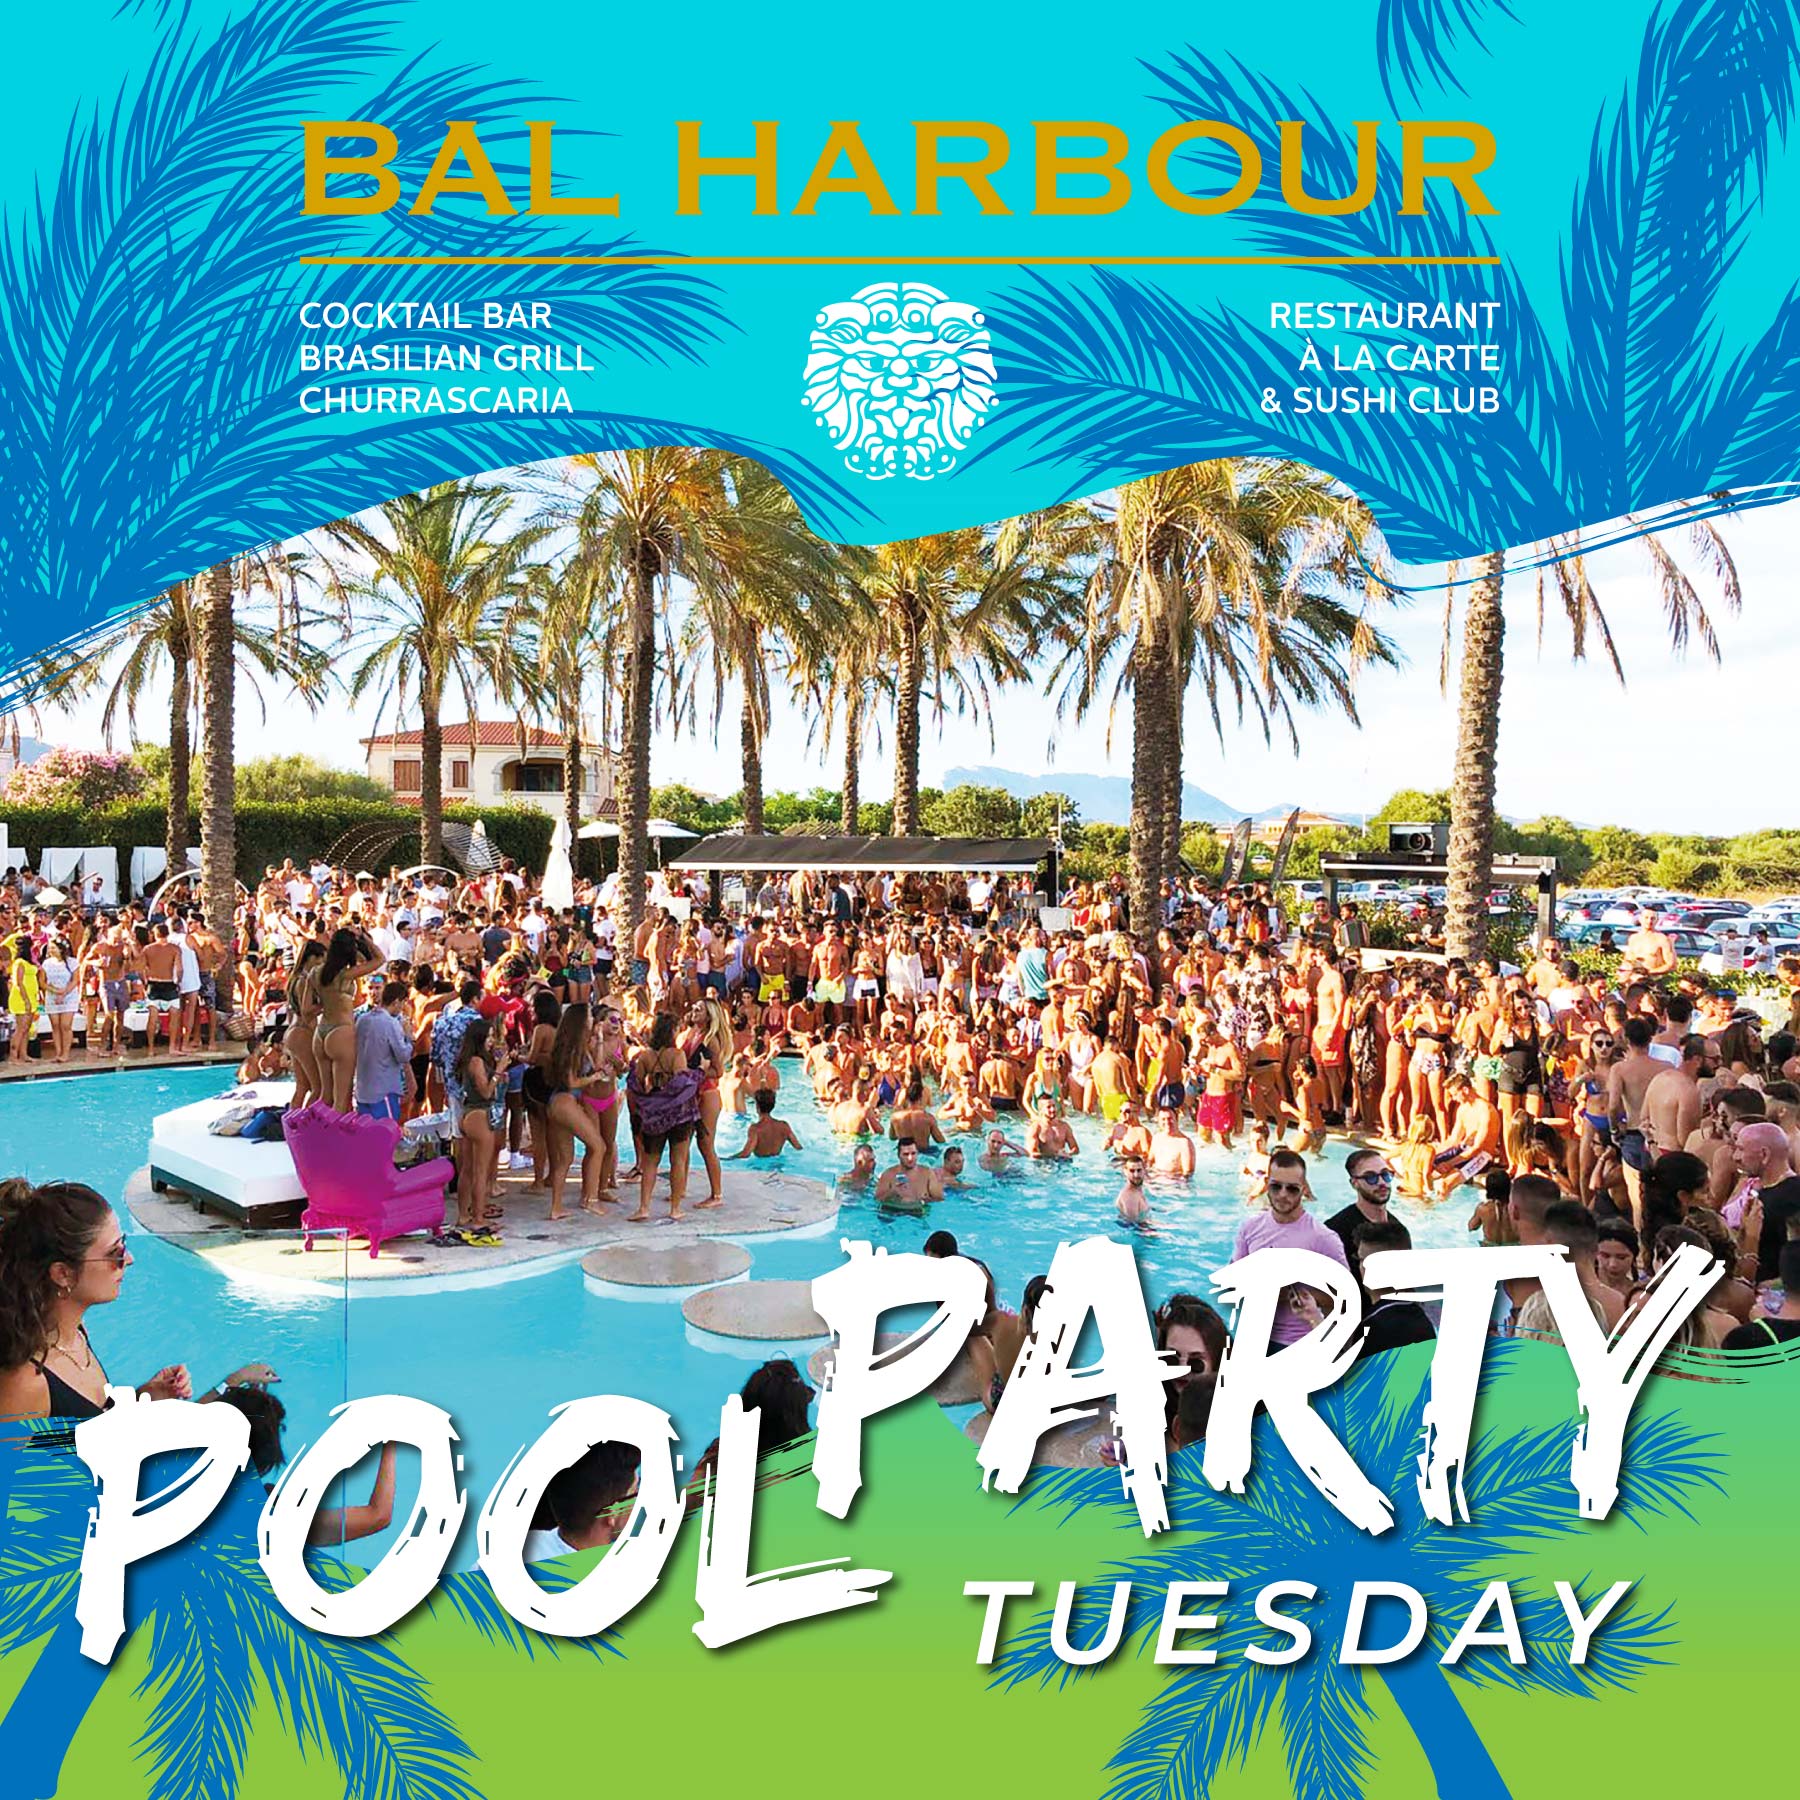 Pool Party in Piscina San Teodoro Martedì 19 Luglio 2022 - Bal Harbour